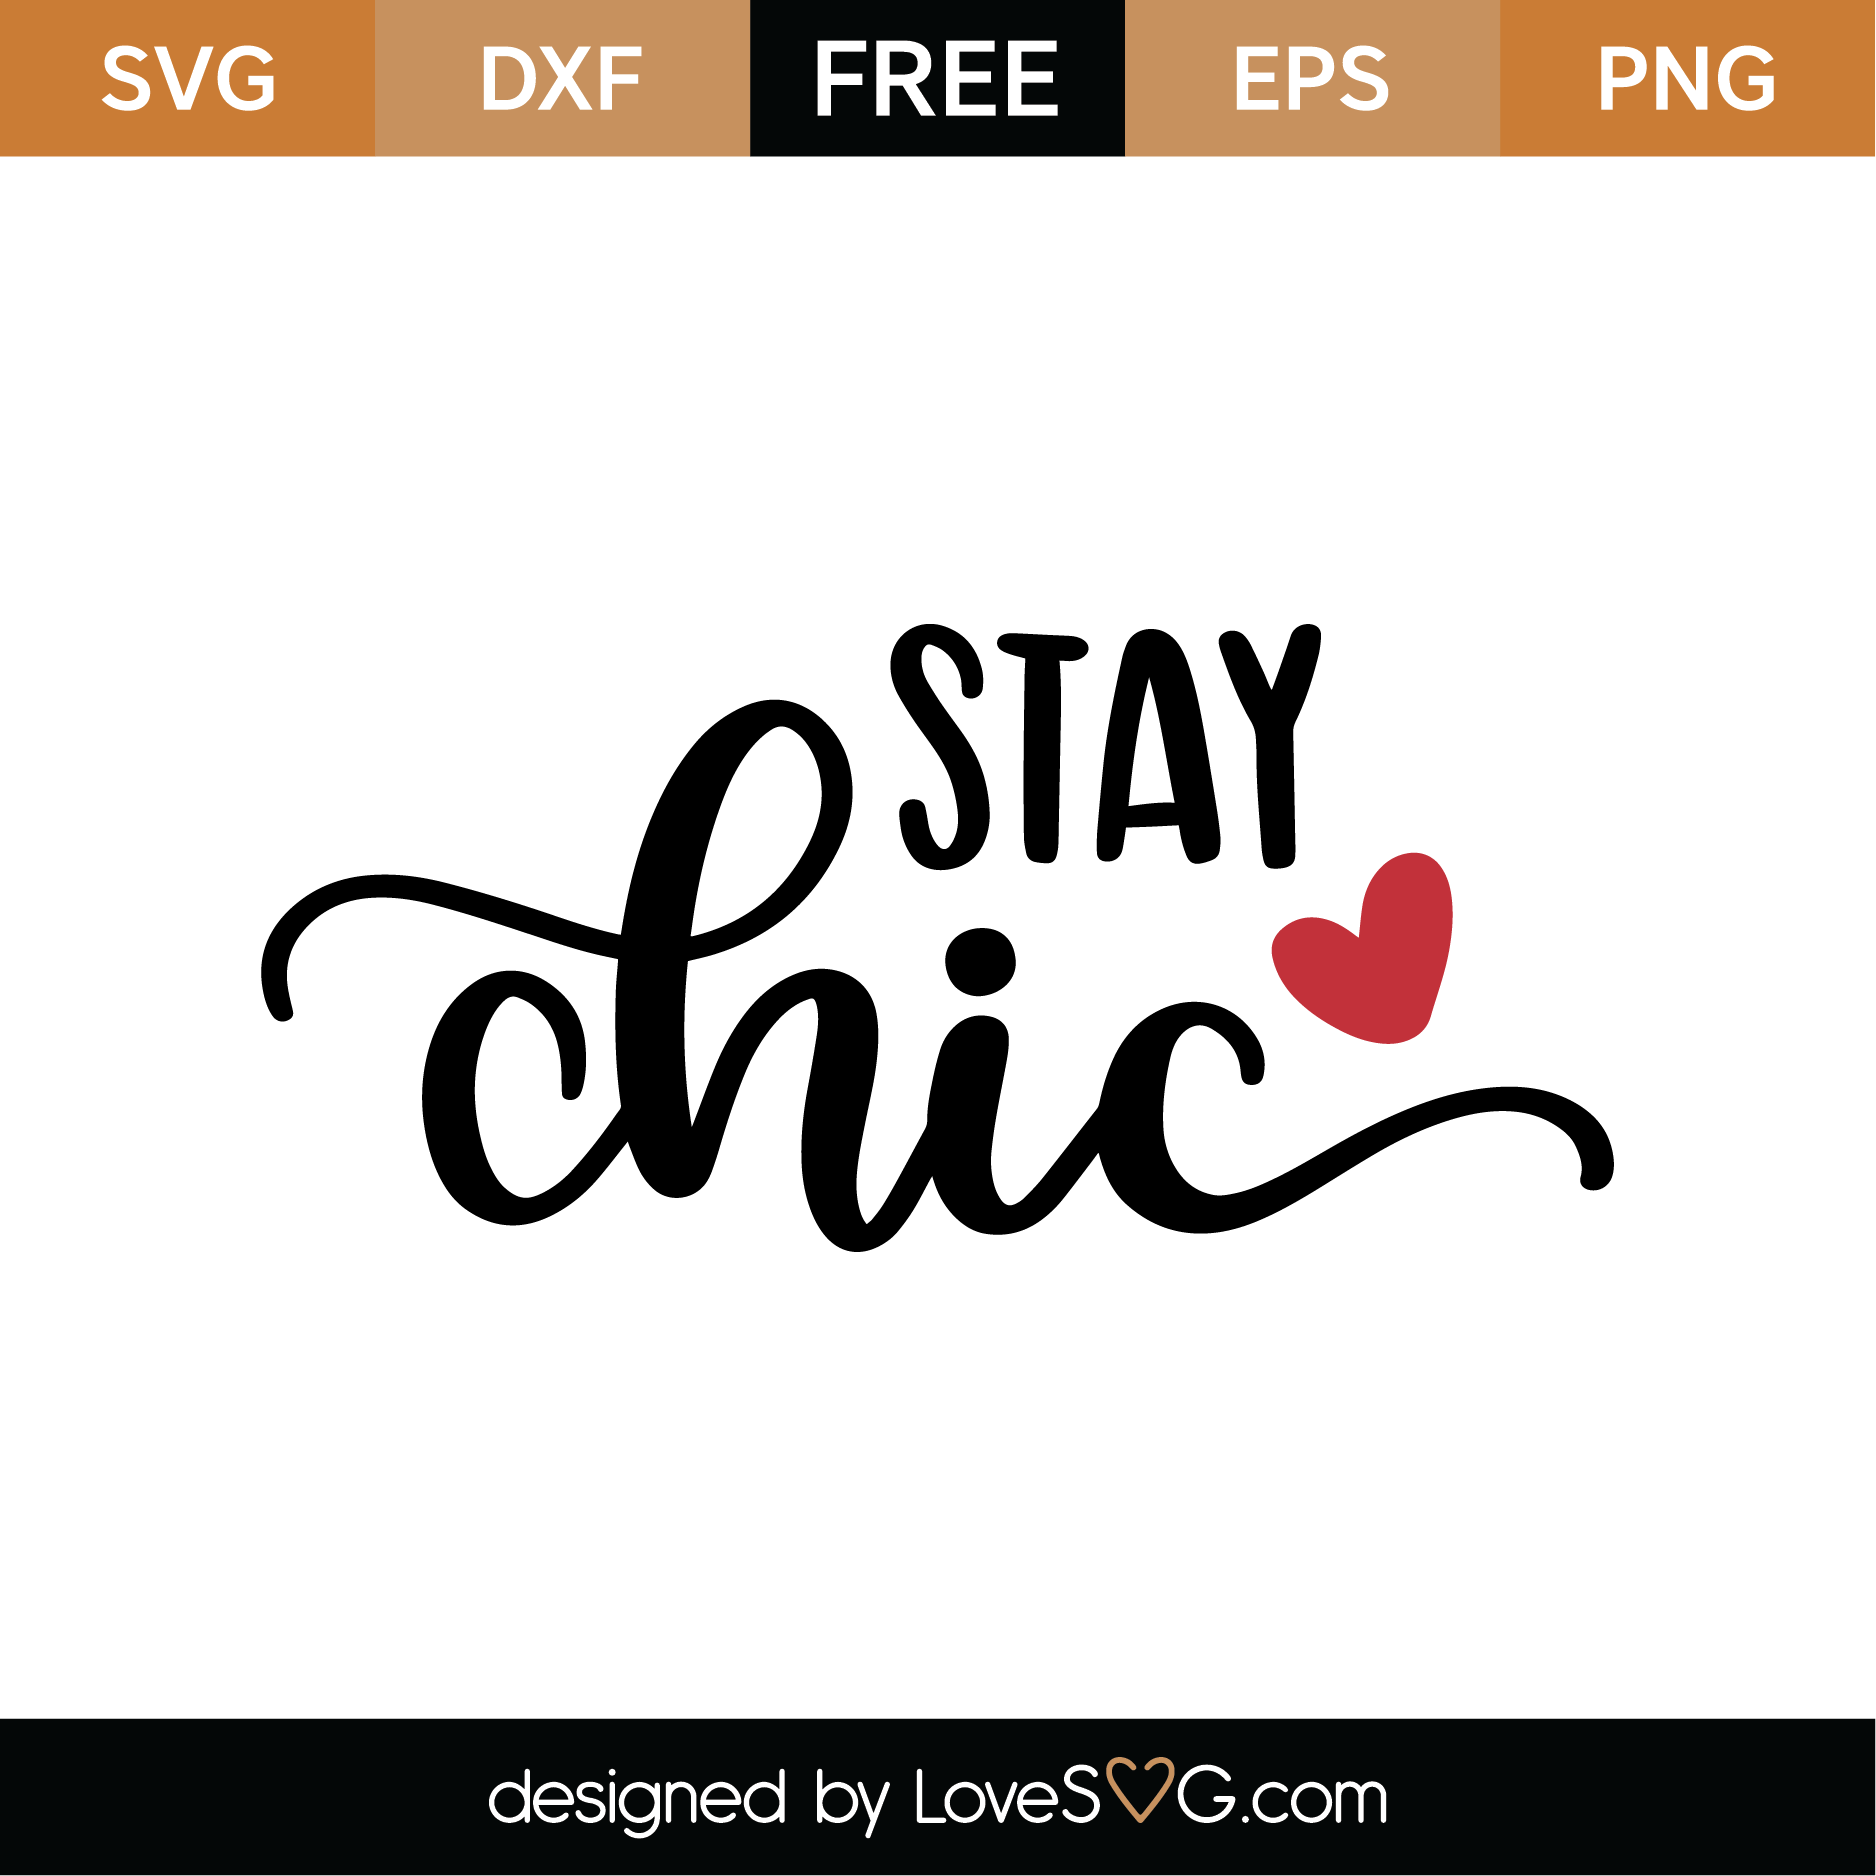 Free Stay Chic SVG Cut File | Lovesvg.com